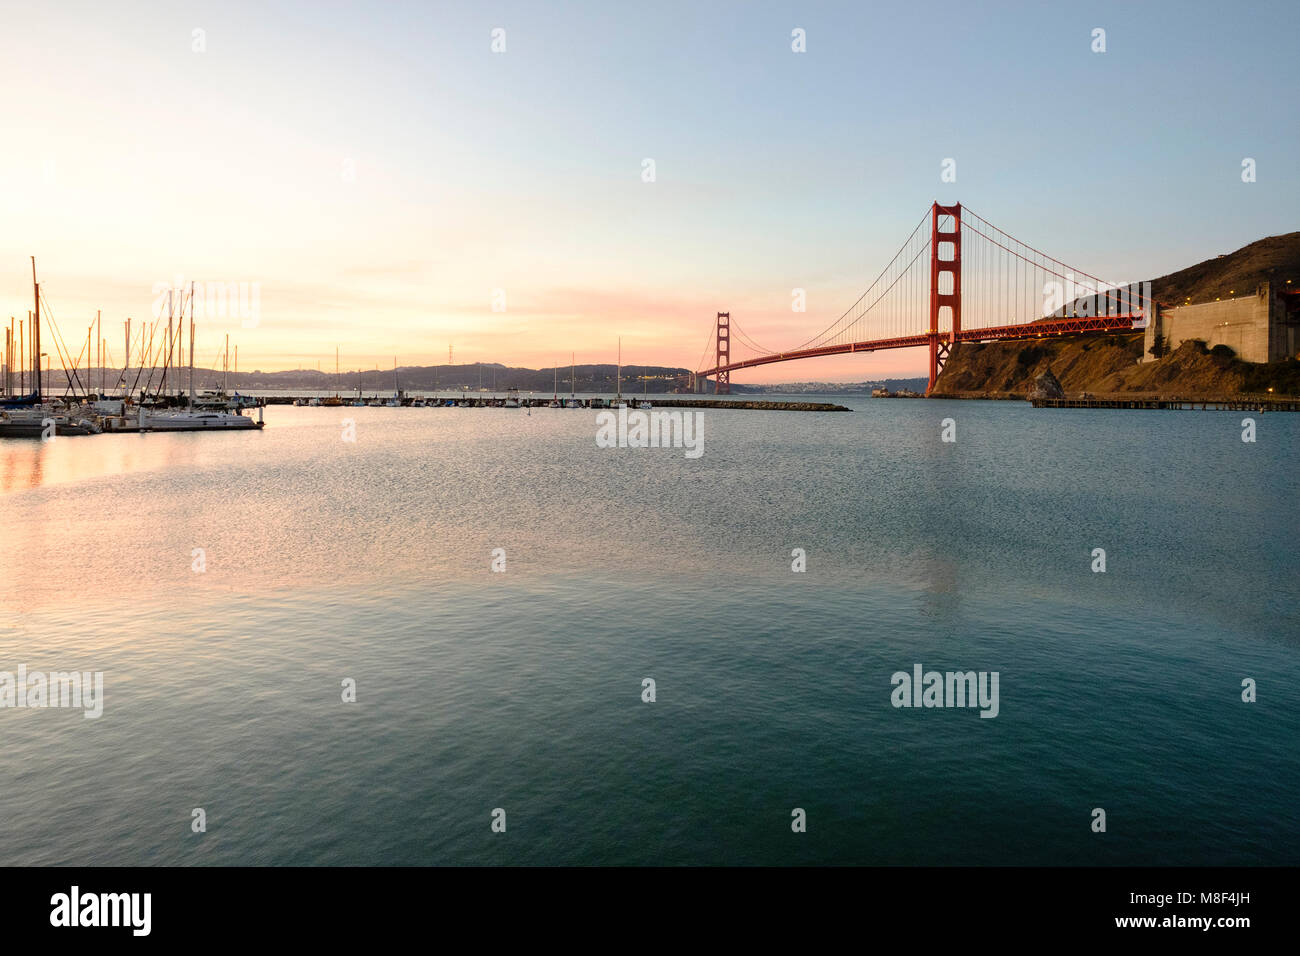 USA, California, San Francisco, Golden Gate Bridge at sunset Stock Photo